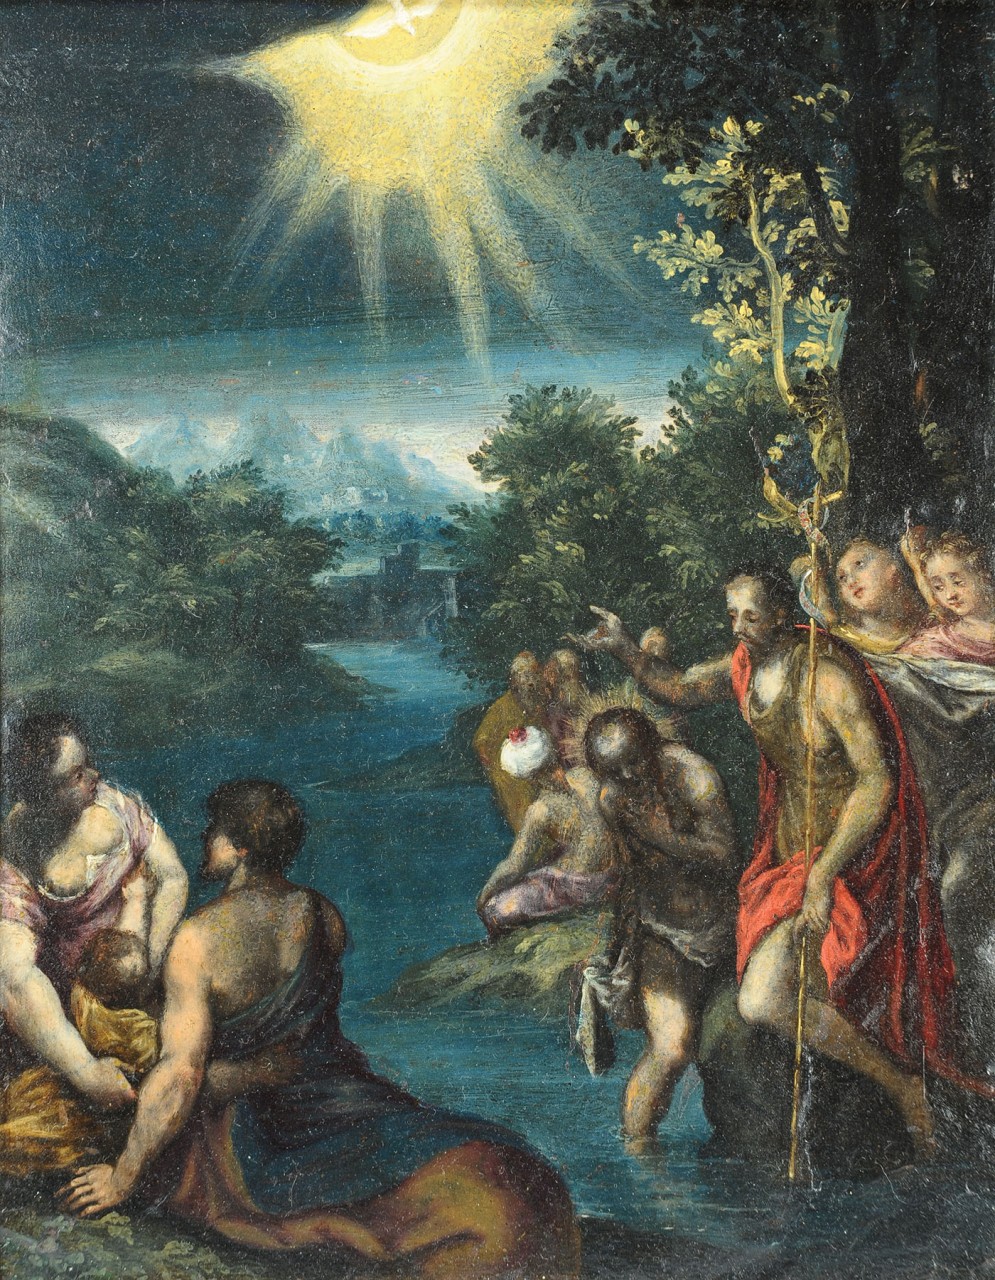 Lot 490: Italian Mannerist School, Baptism Of Christ, 17th